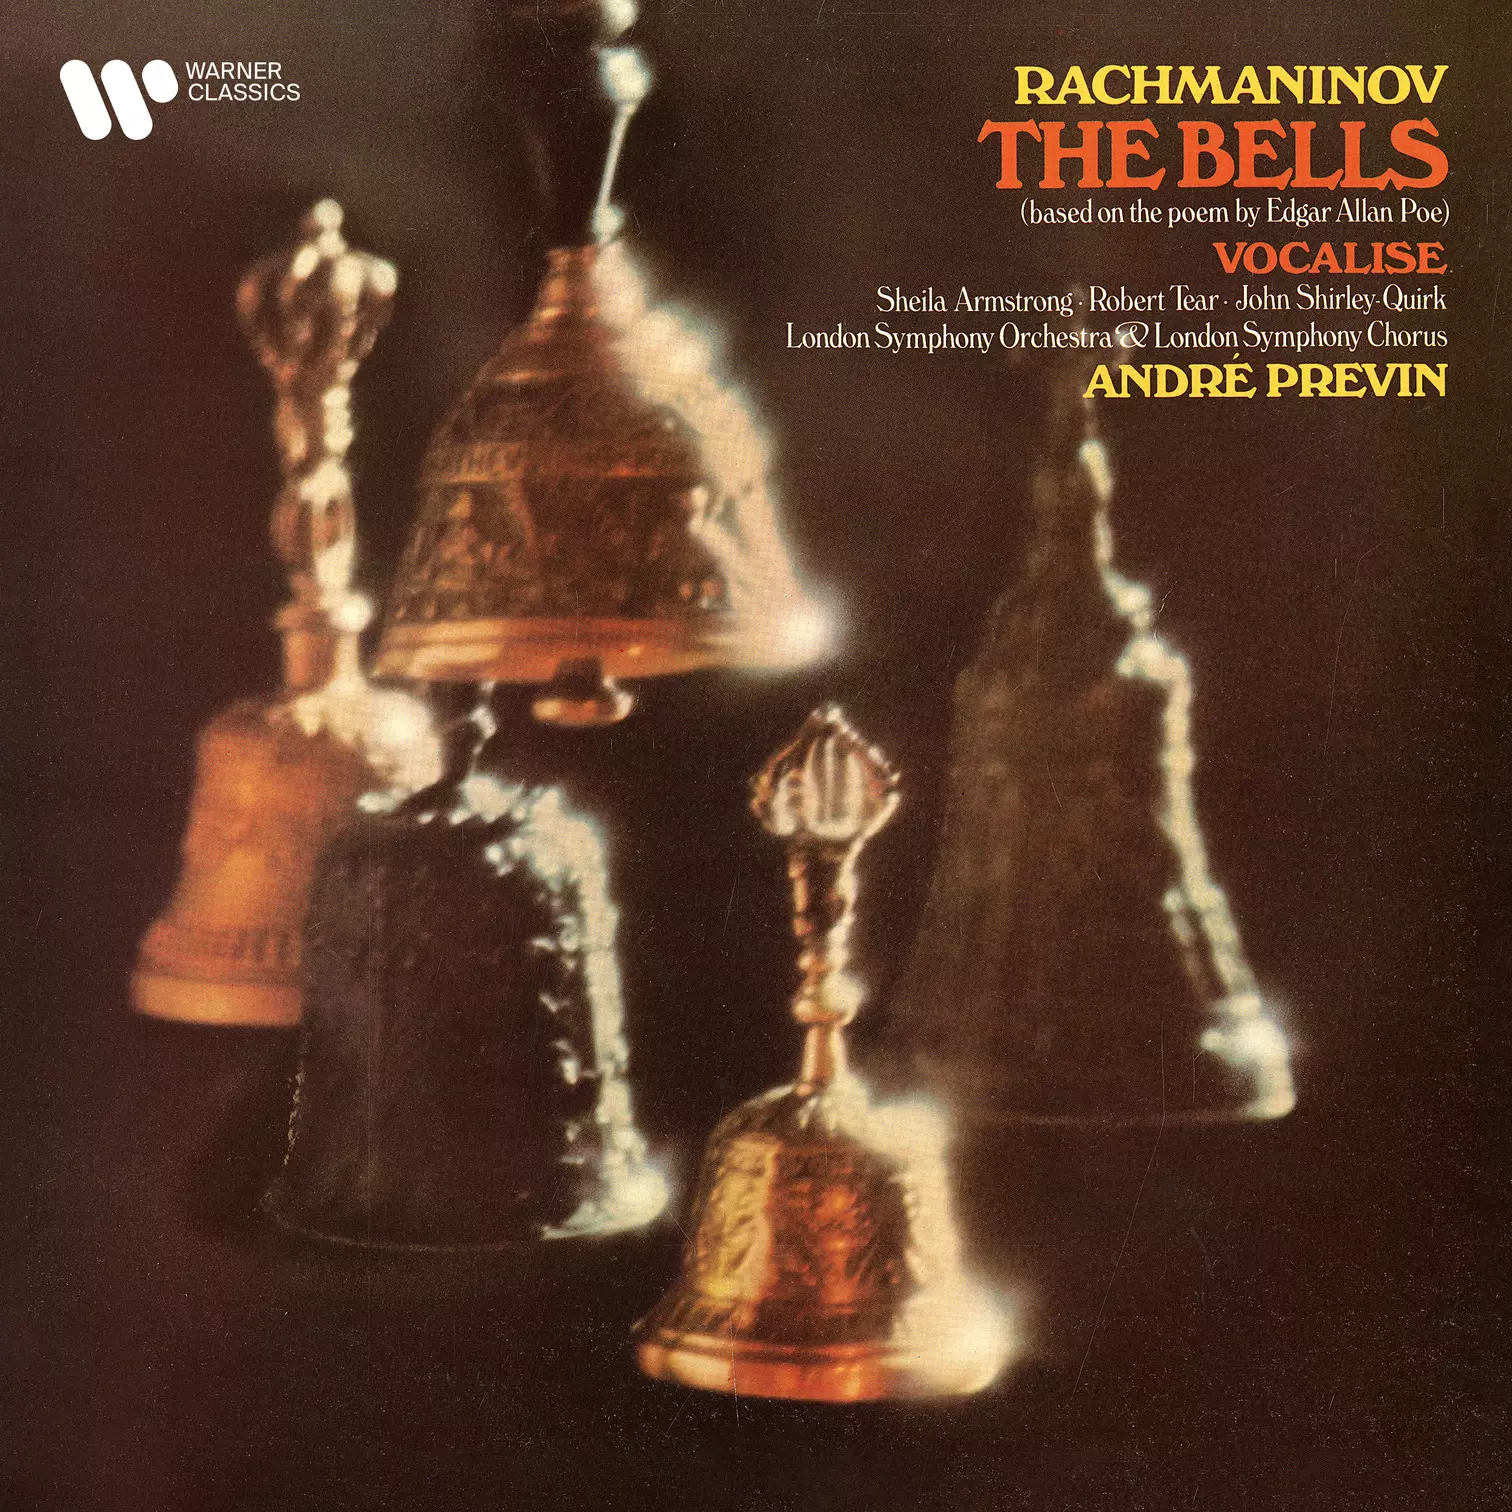 Rachmaninov: The Bells & Vocalise